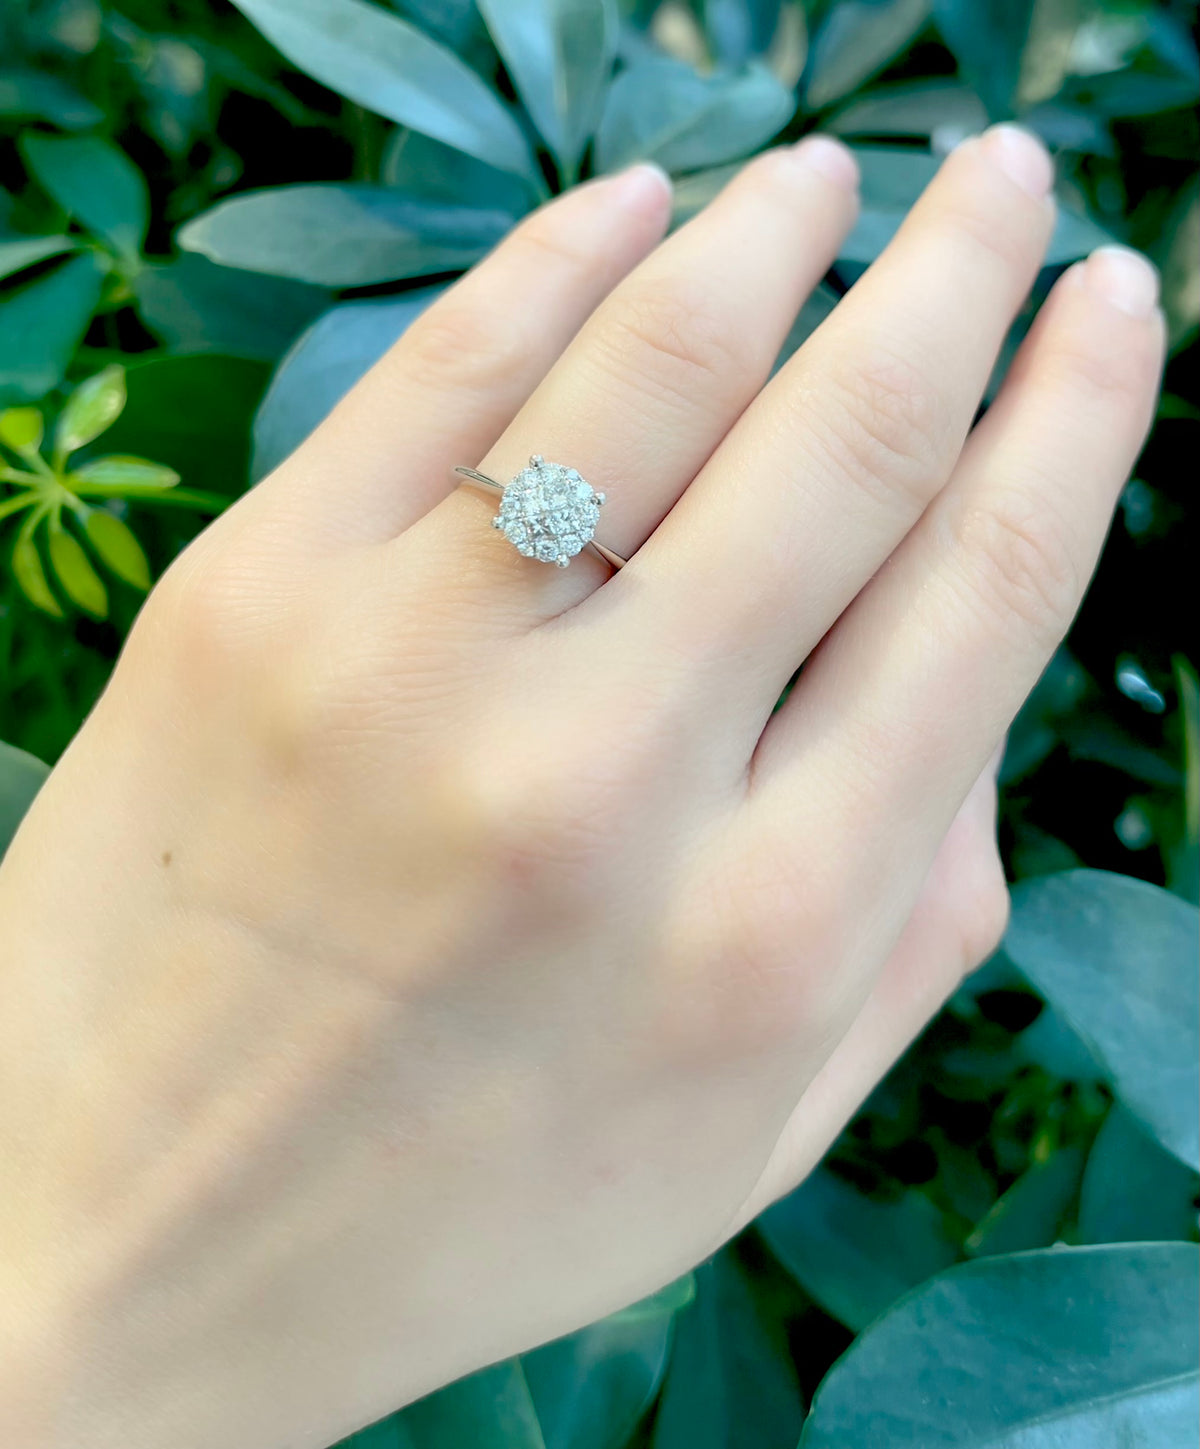 14K White Gold 0.47cttw Diamond Halo Engagement Ring, size 6.5